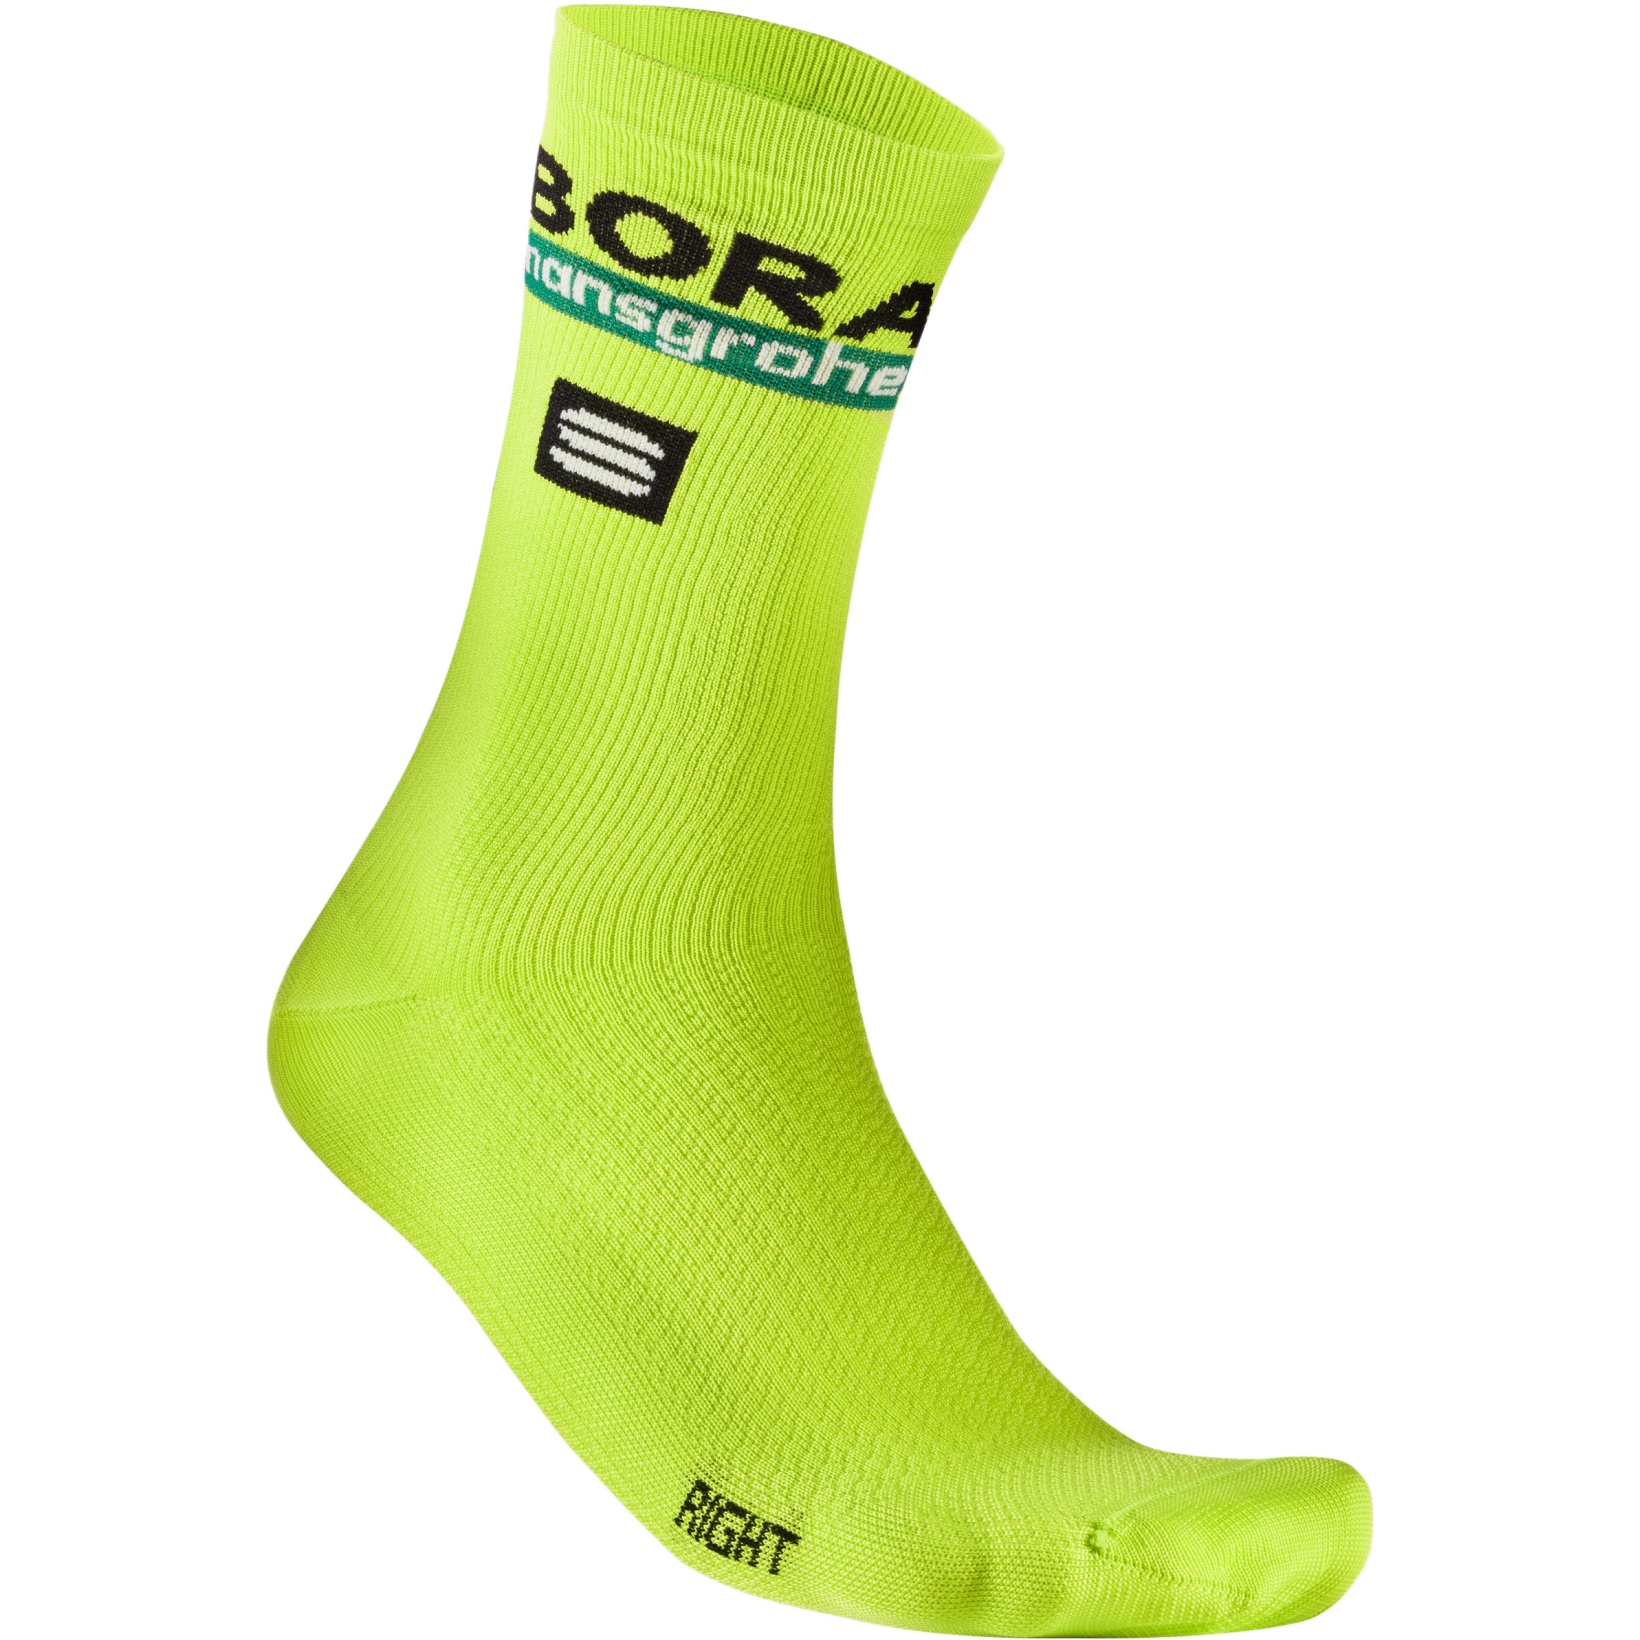 Productfoto van Sportful BORA-hansgrohe Race Sokken - 384 Lime